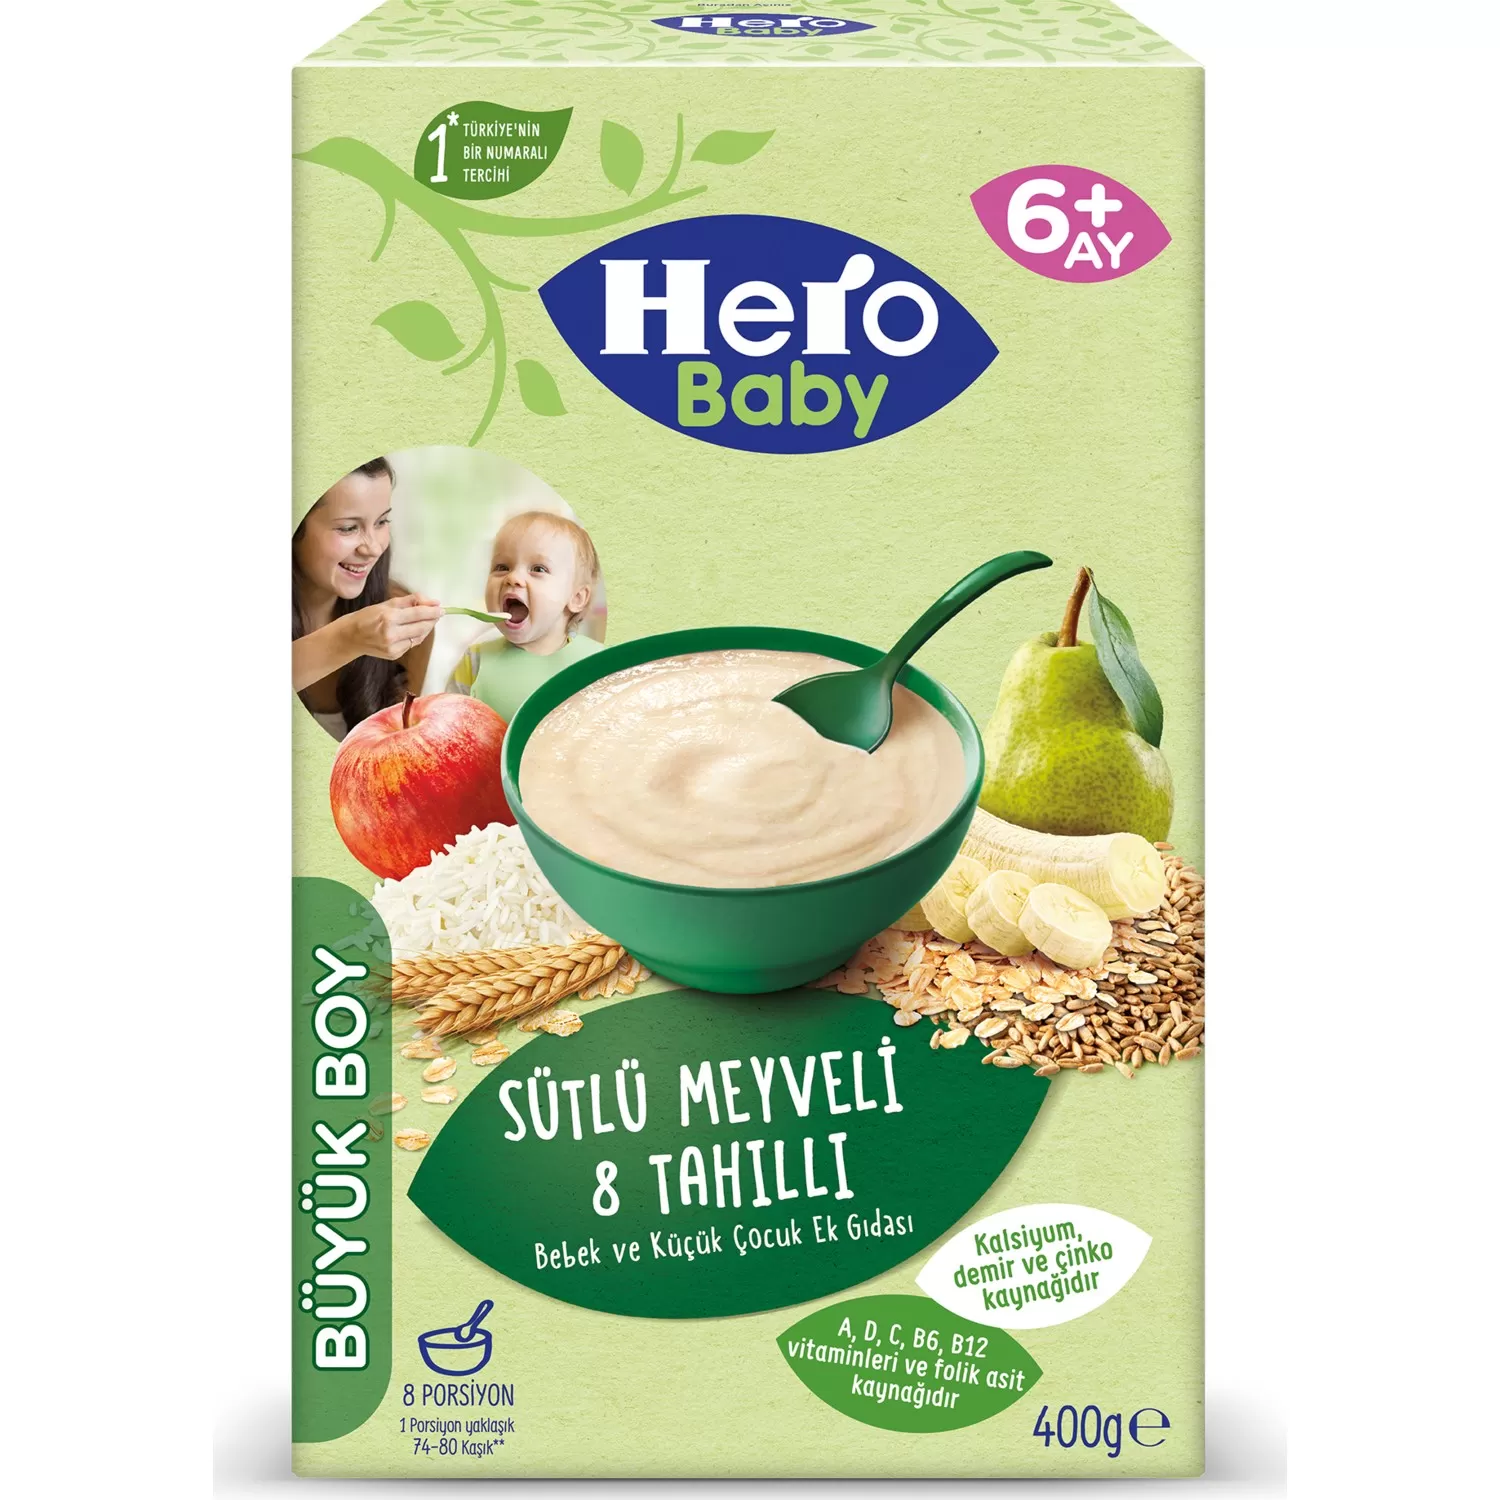 Hero Baby Sütlü Meyveli 8 Tahıllı Kaşık Mama 400 gr 2'li Paket